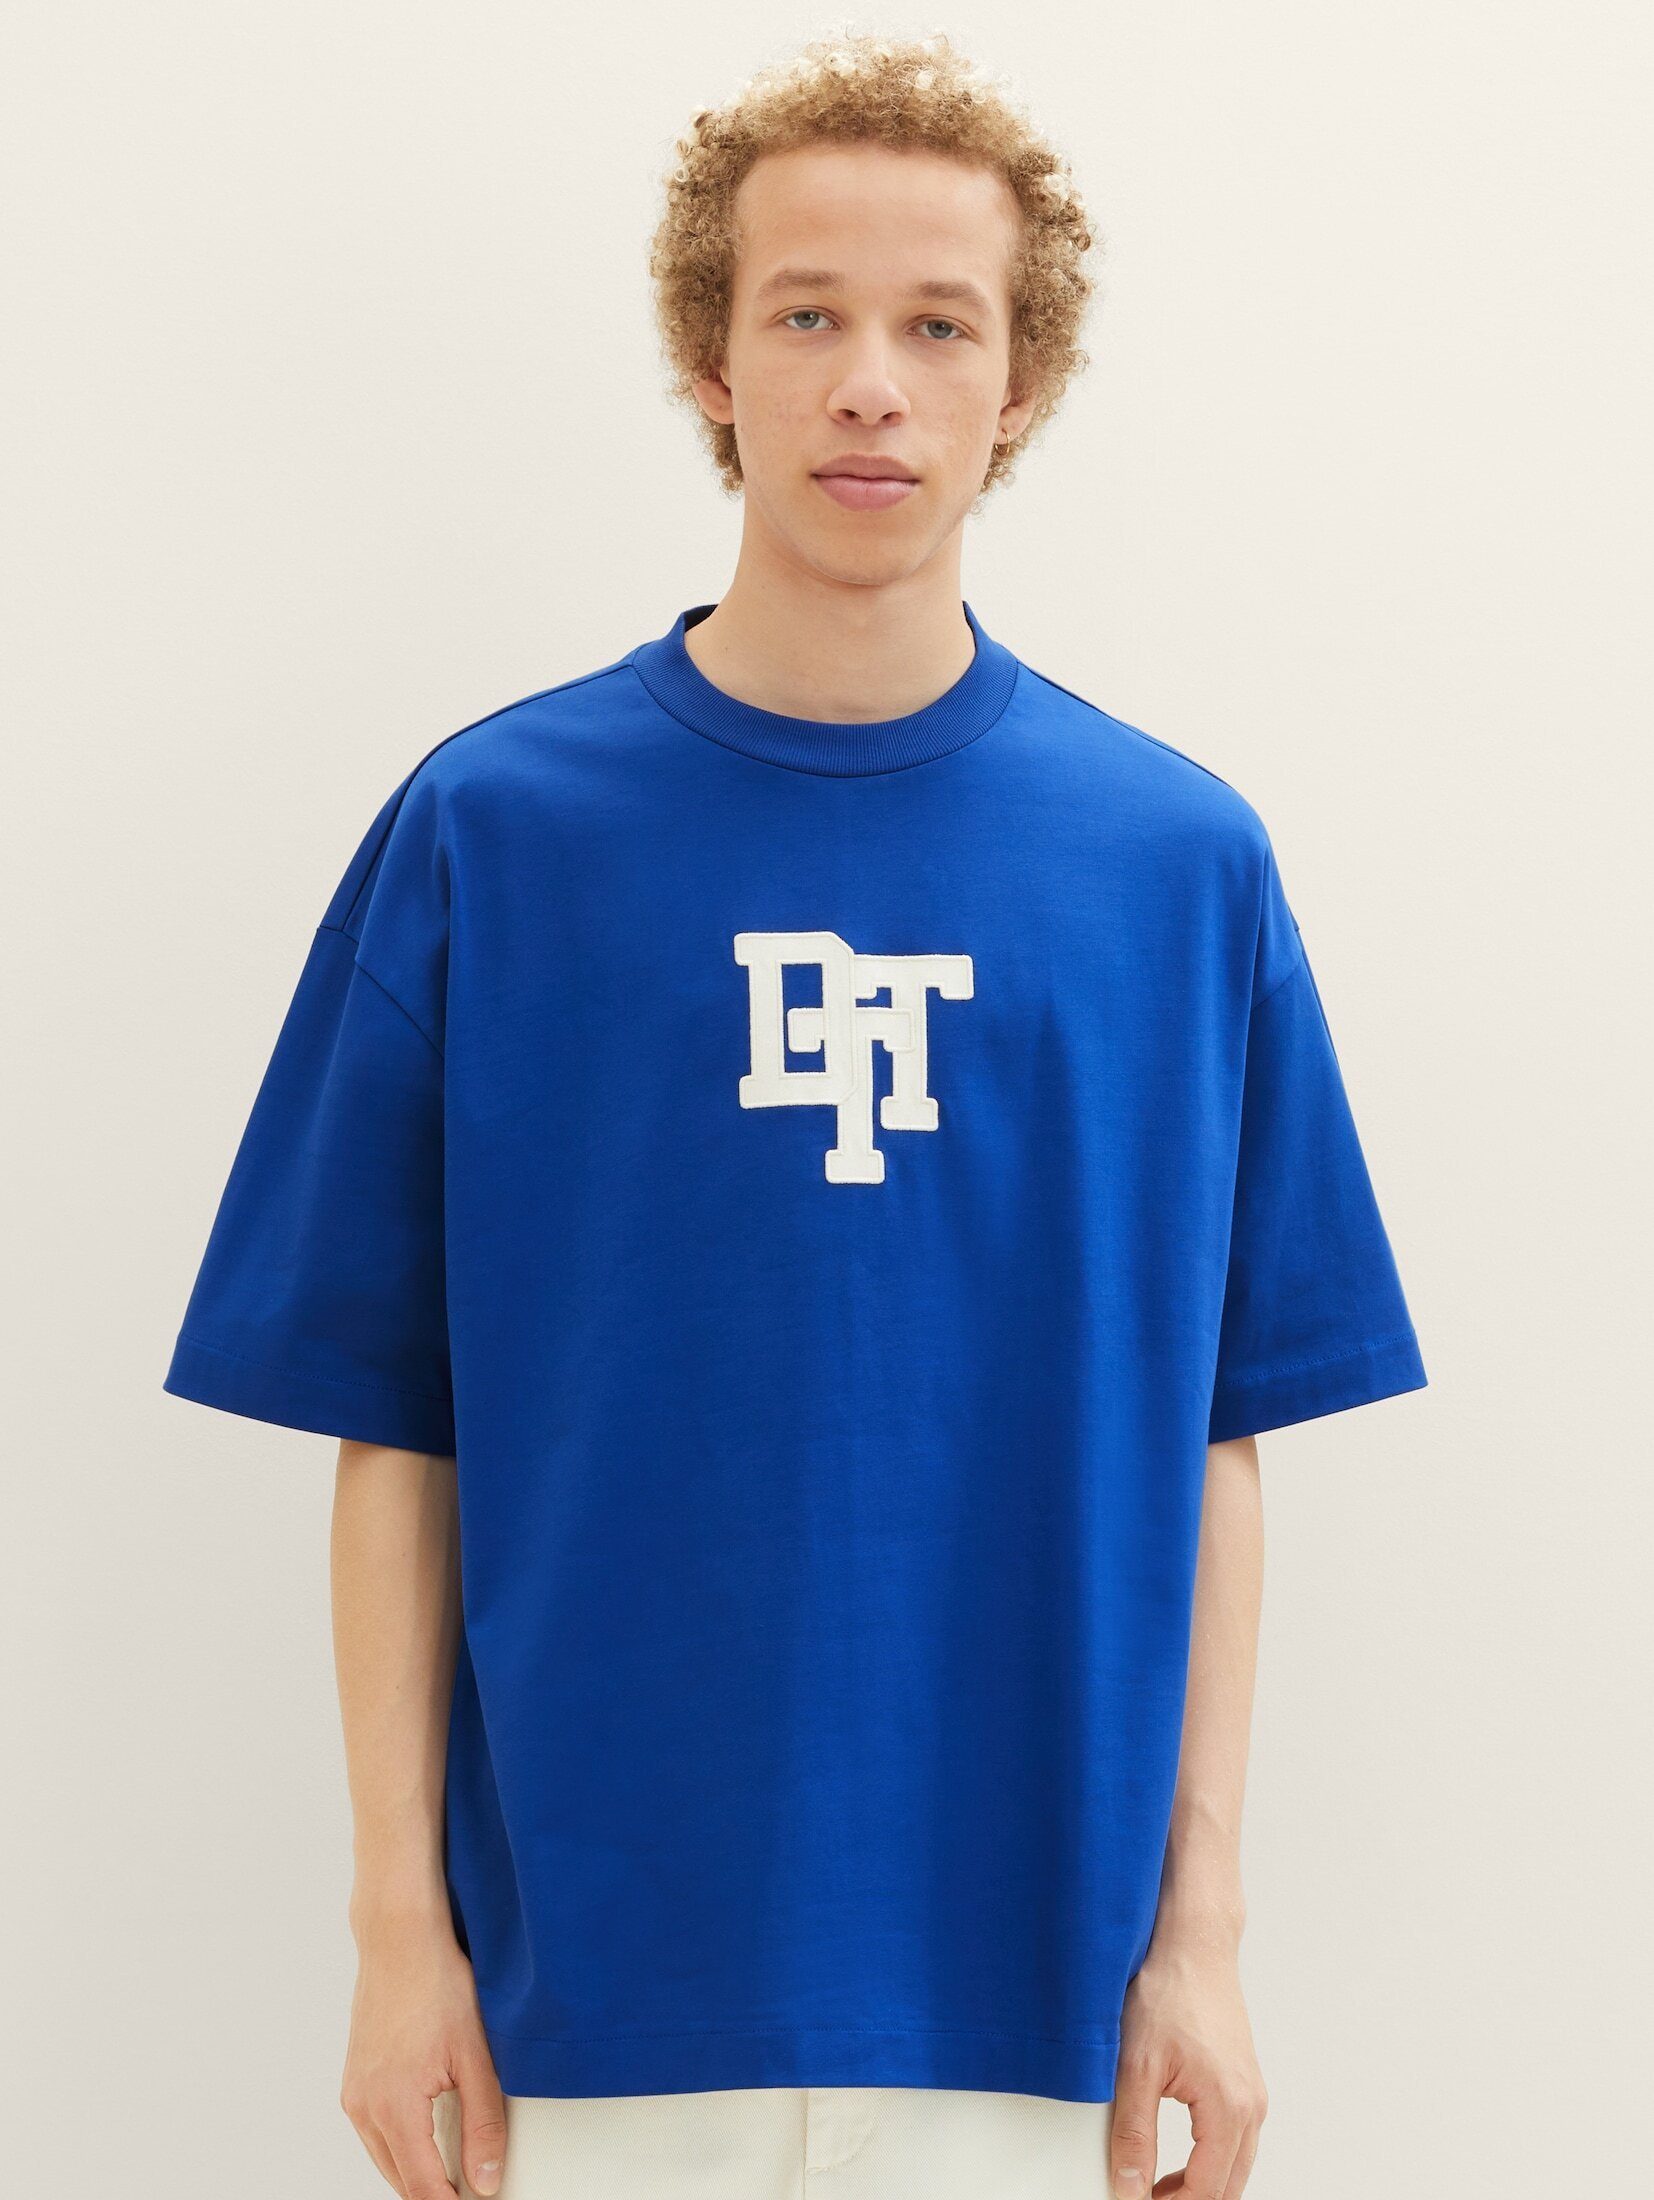 TOM TAILOR Denim T-Shirt Oversized blue T-Shirt Applikation royal mit shiny